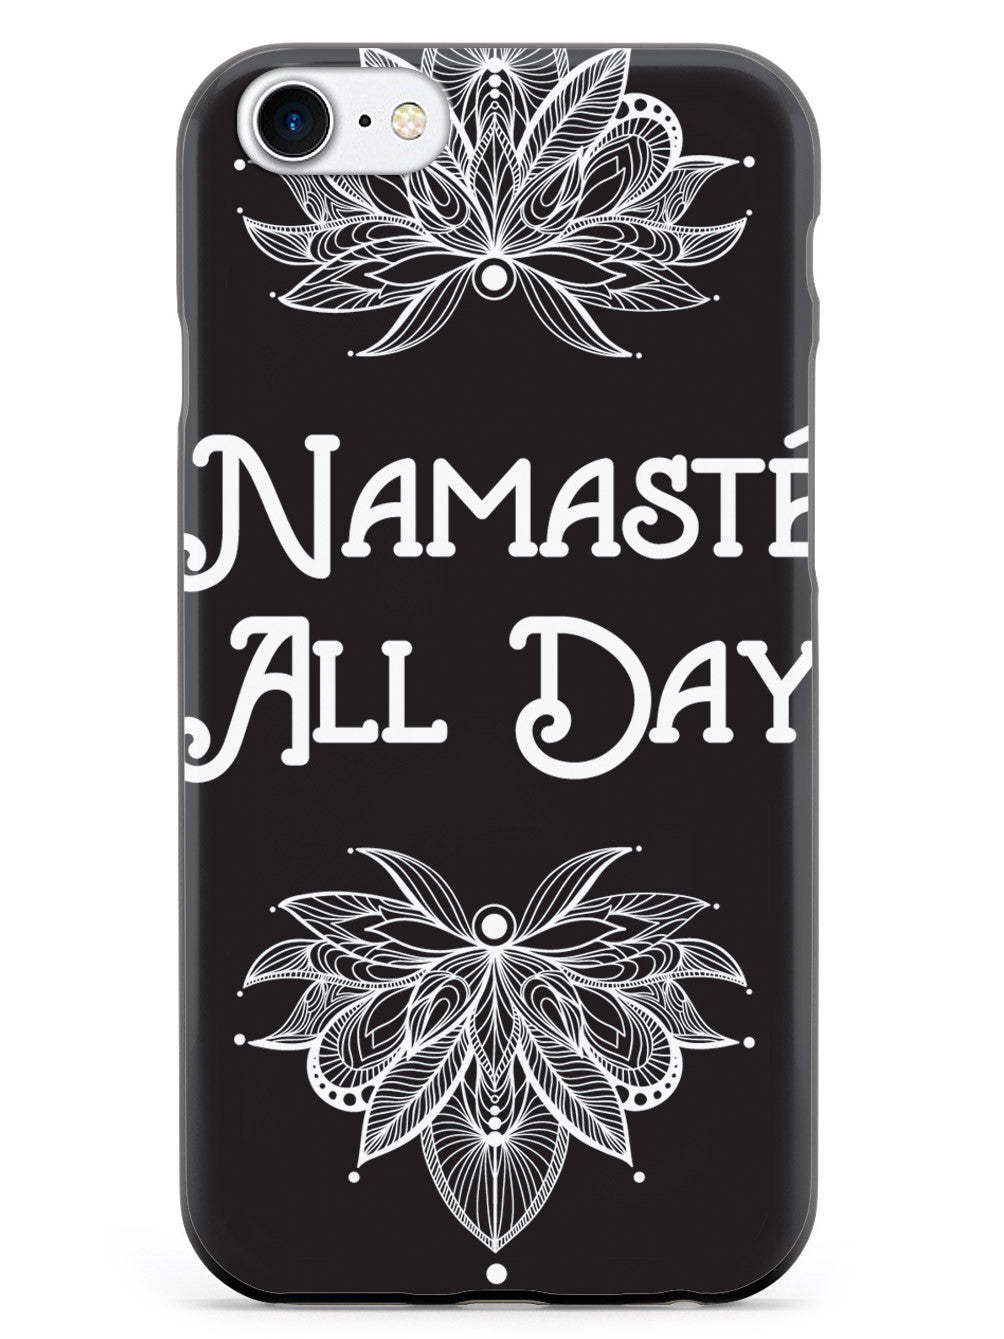 Namaste All Day Case